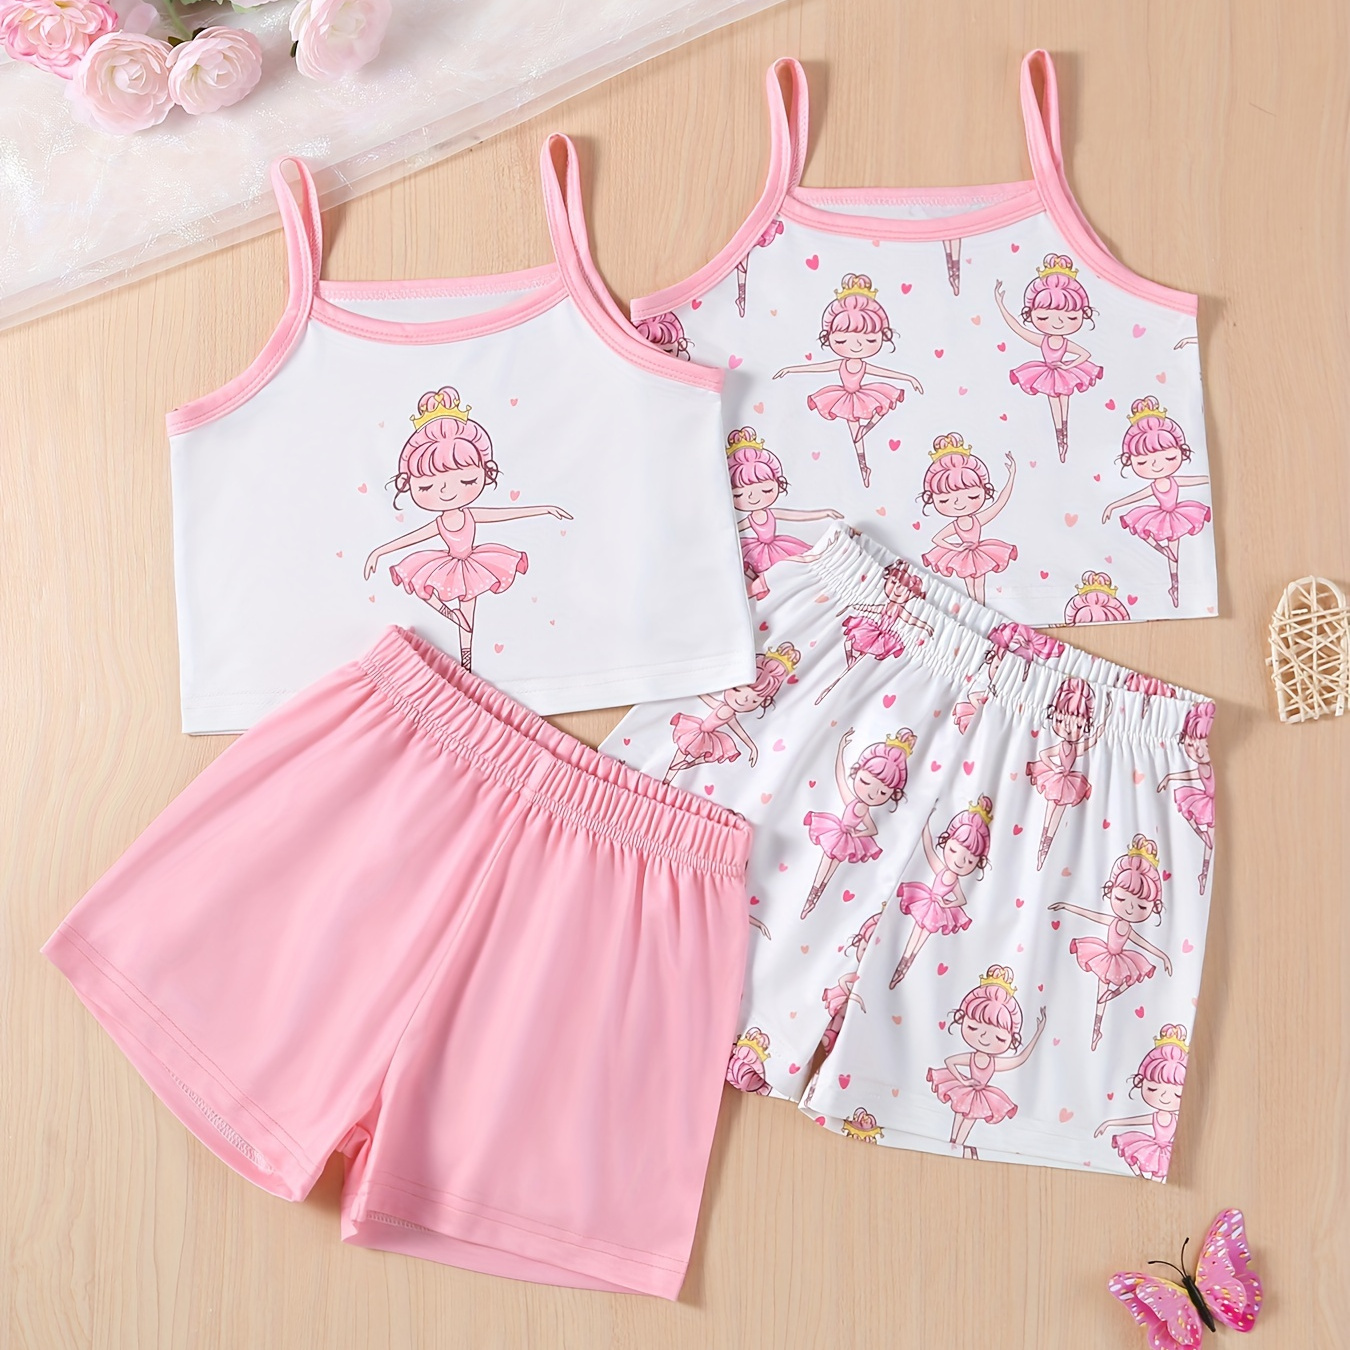 

4 Pcs Girls Cute Pajama Sets, Cute Cartoon Girl Print Camisoles & Shorts, Comfortable & Cute Style Princess Pajamas For Girls Cozy Loungewear